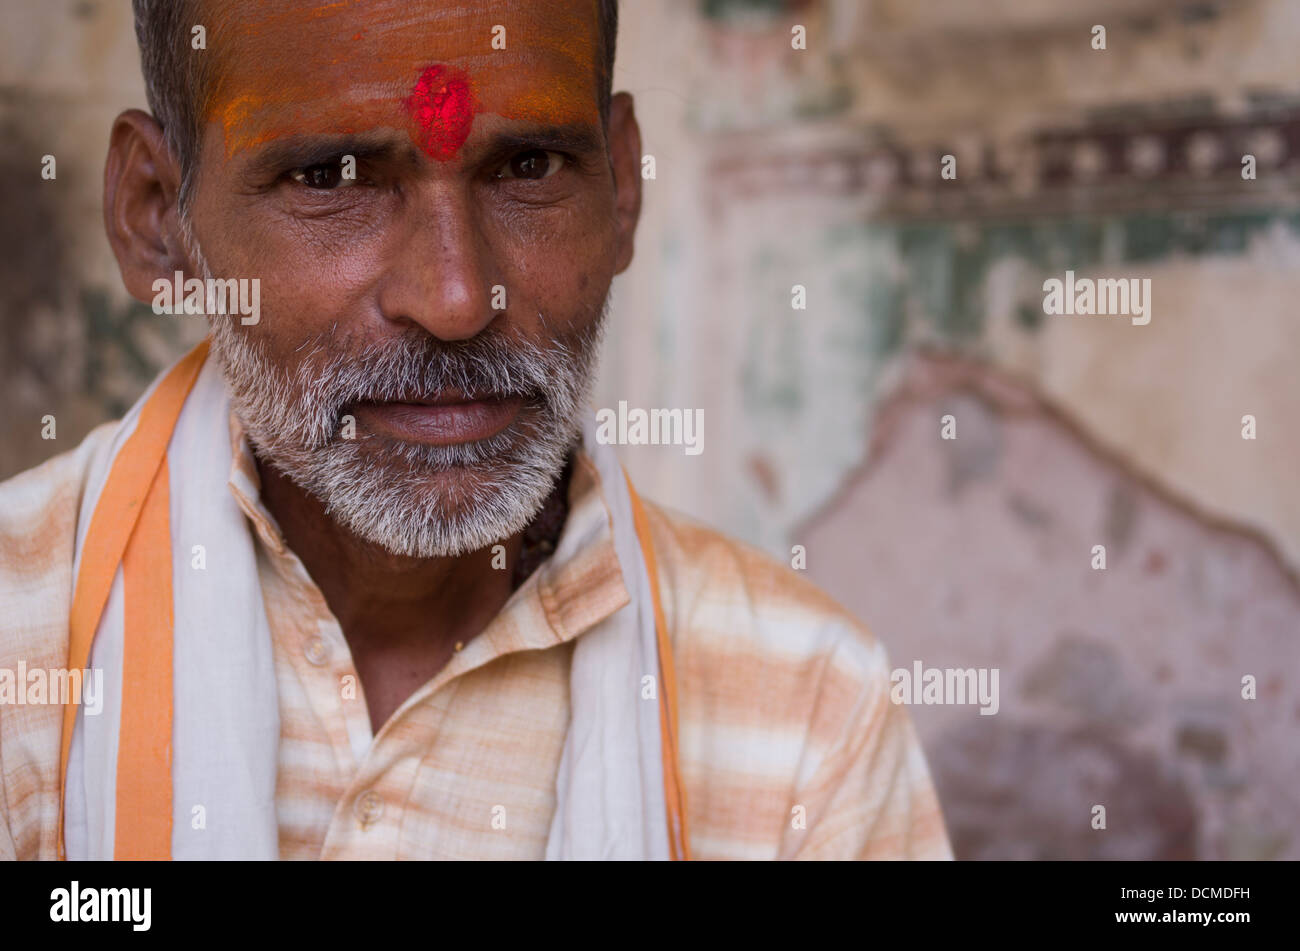 Hindu Man with tilak on forehead and beard at Galta Monkey Palace / Temple - Jaipur, Rajasthan, India Stock Photo